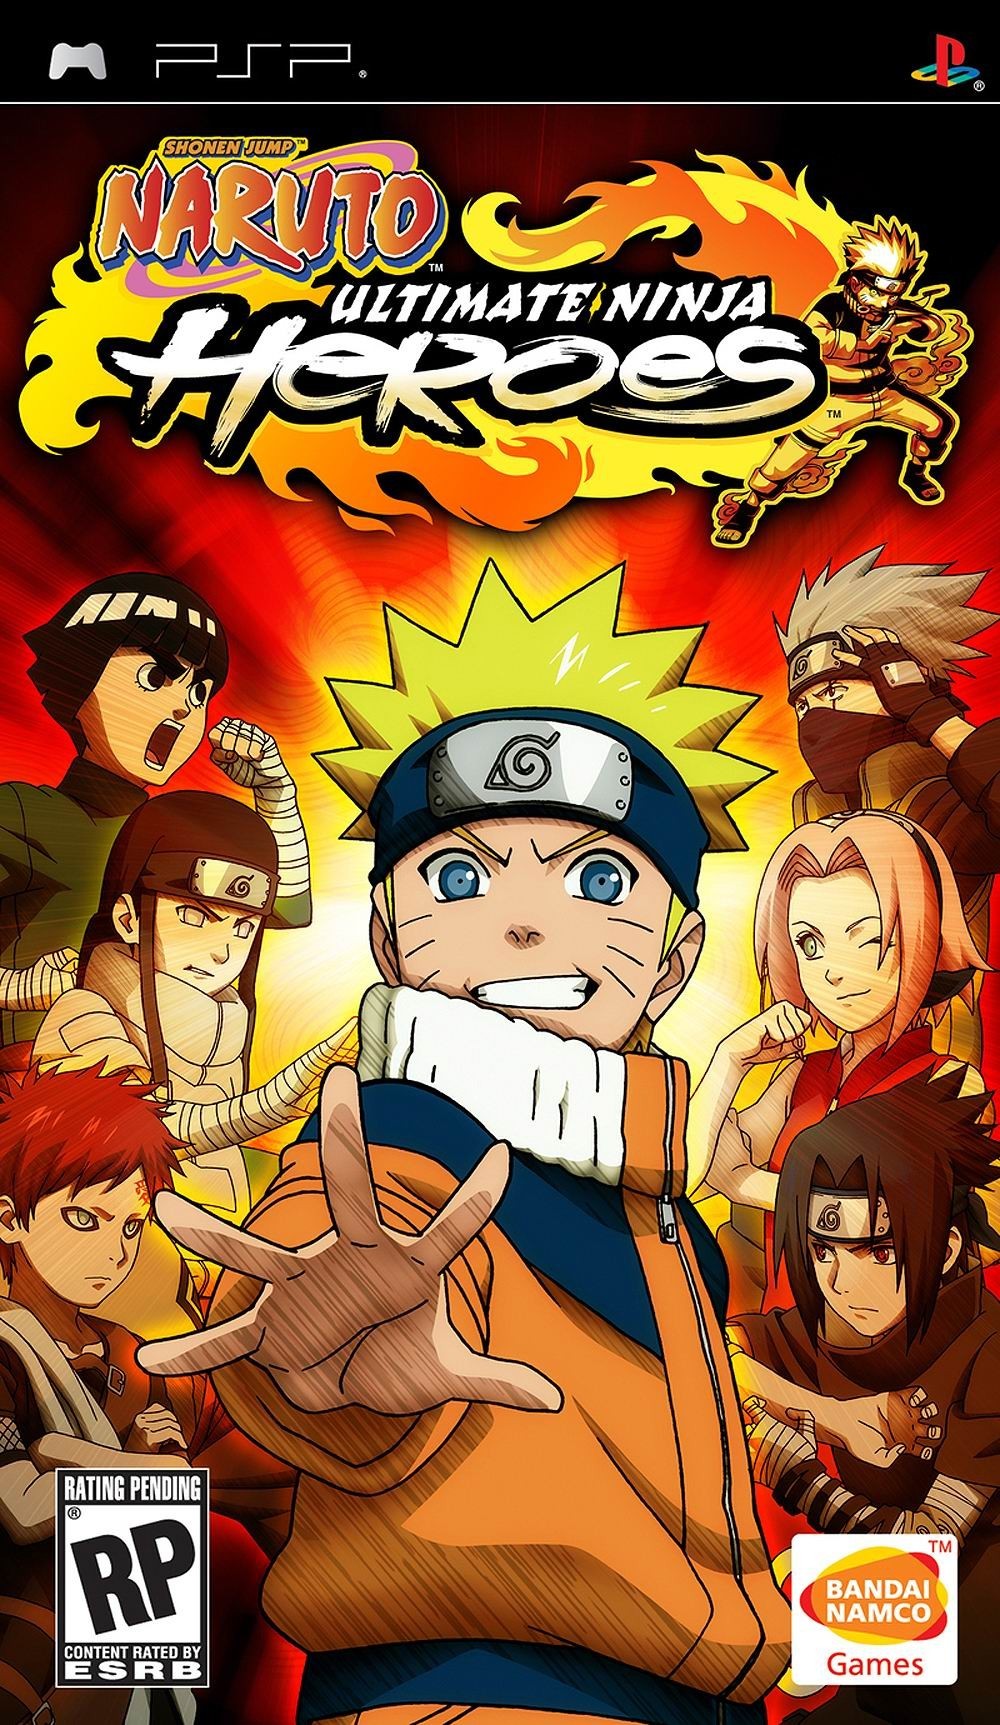 Naruto: Ultimate Ninja Heroes | Narutopedia | Fandom powered by Wikia